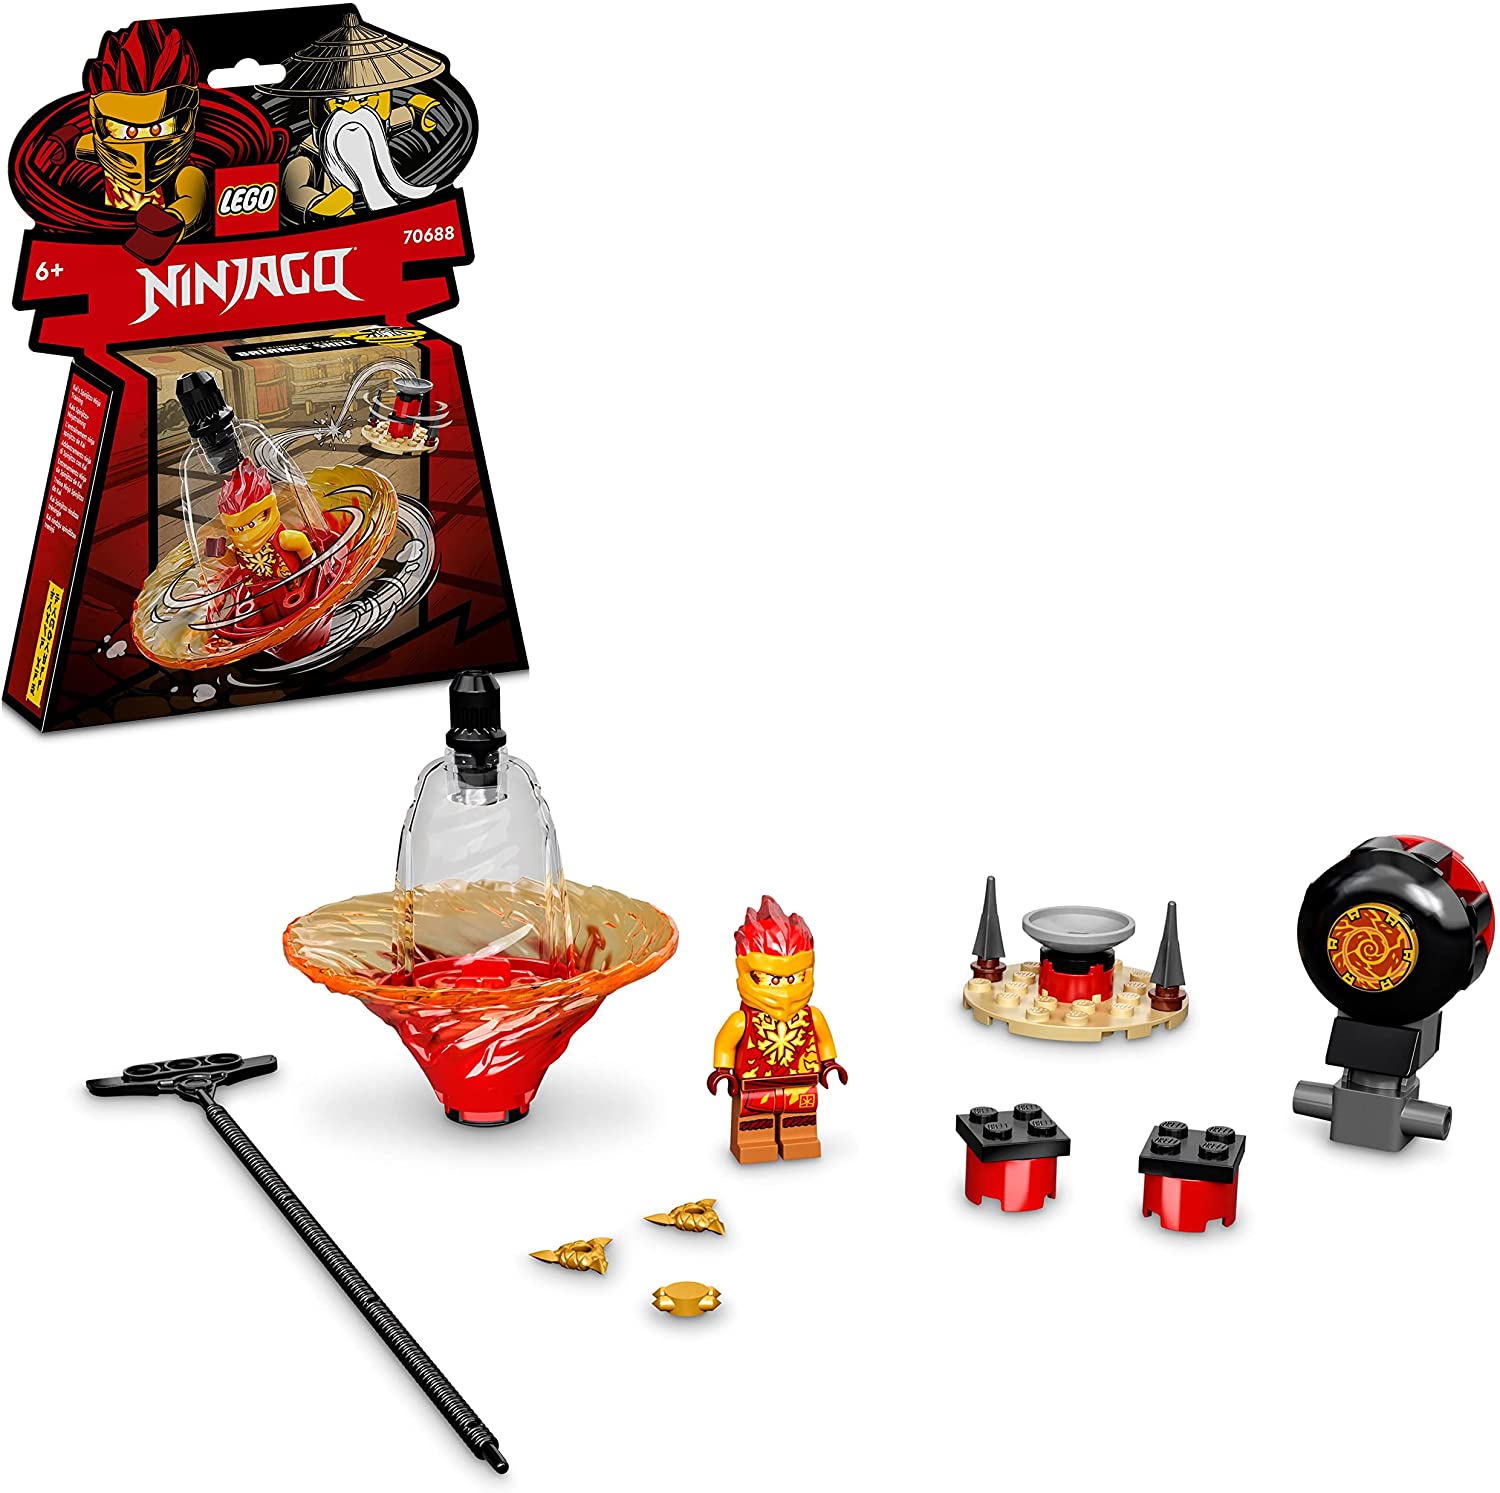 LEGO 70688 NINJAGO Kais Spinjitzu Ninjatraining Action Toy with Ninja Spinn